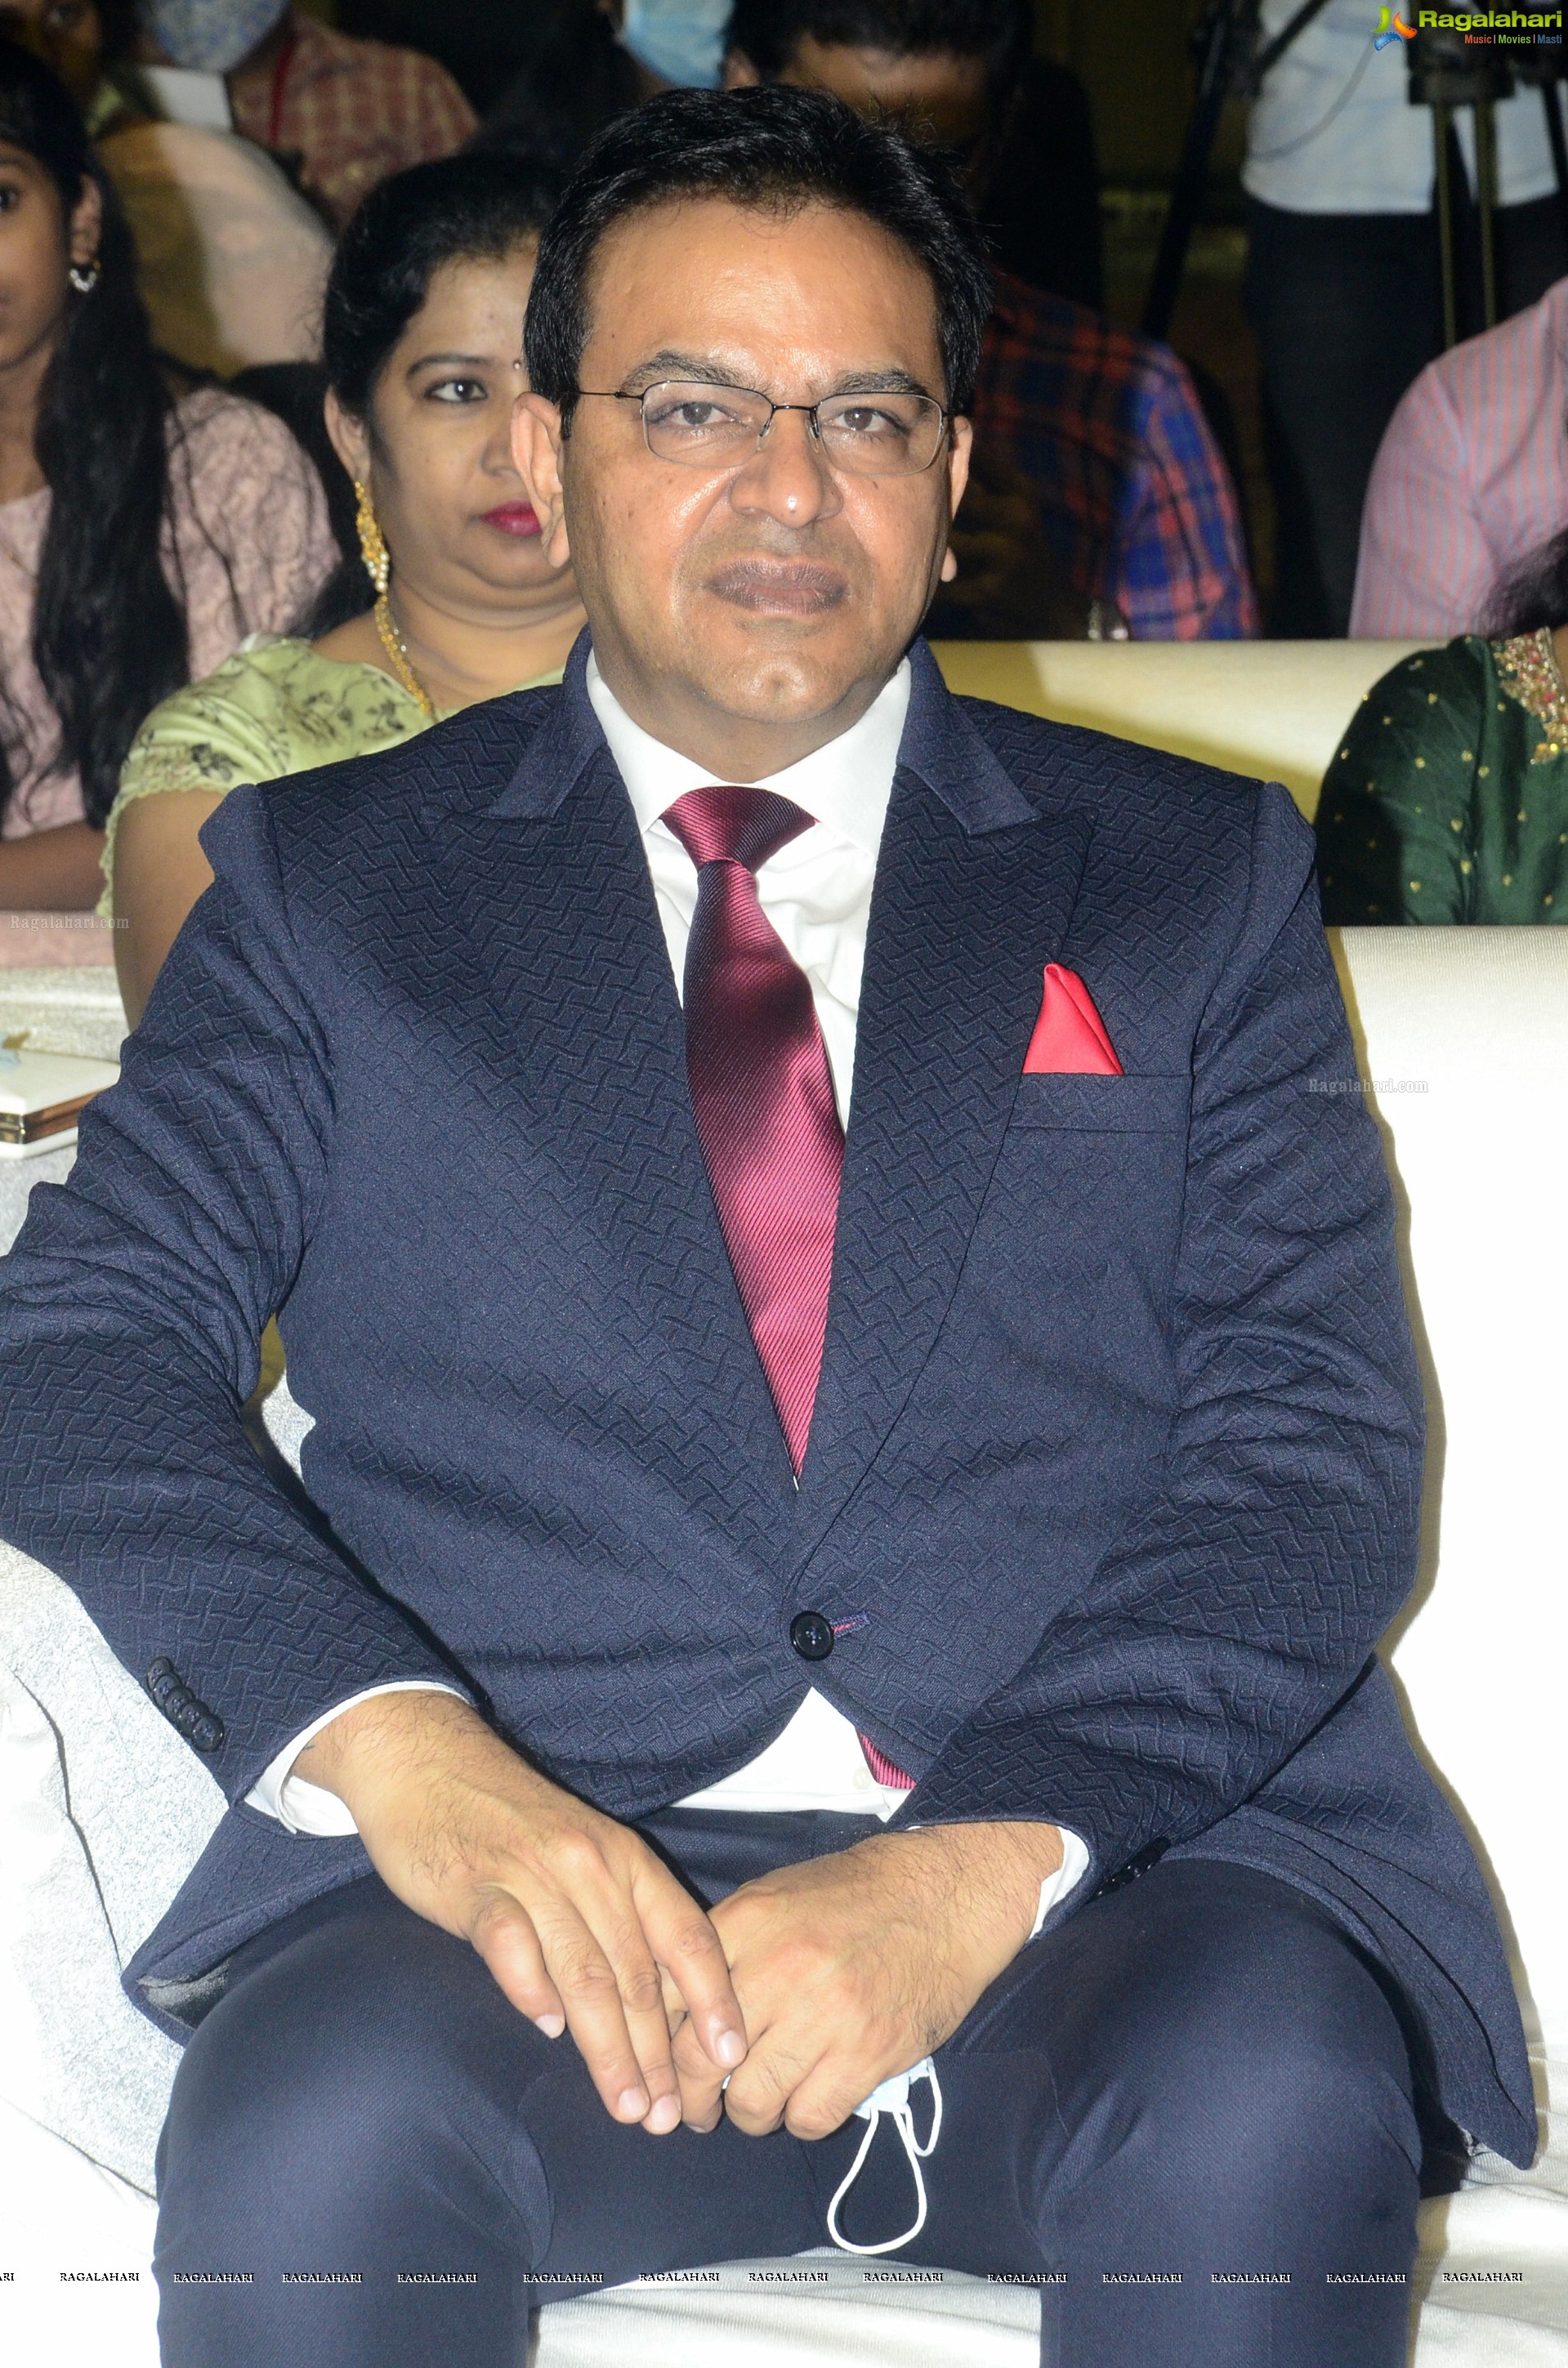 Mahesh Babu As The Brand Ambassador For Big C